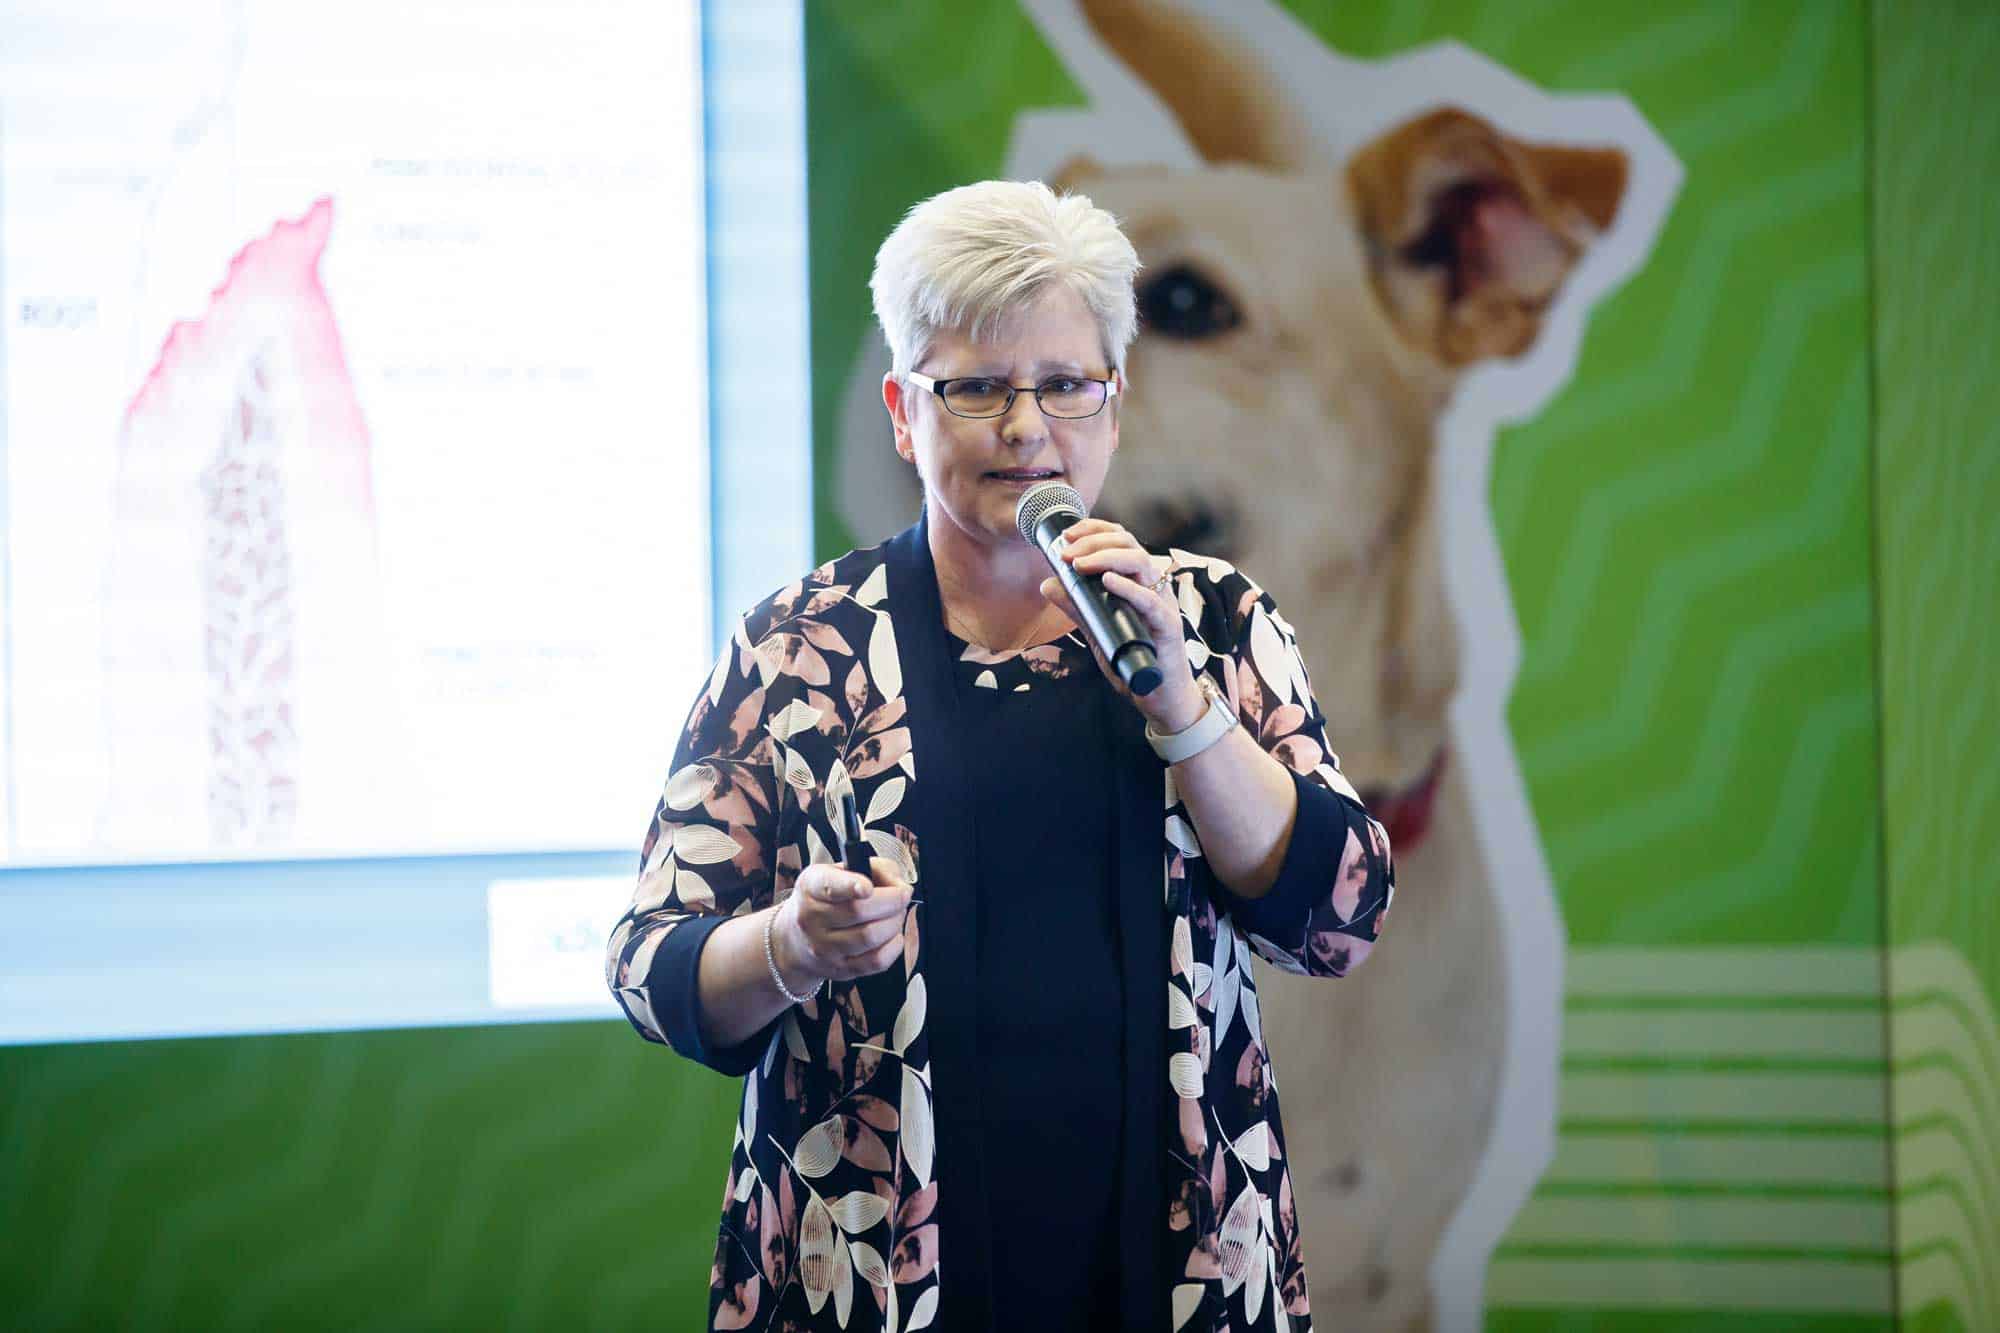 Dr. Wendy Hauser | Peak Veterinary Consulting